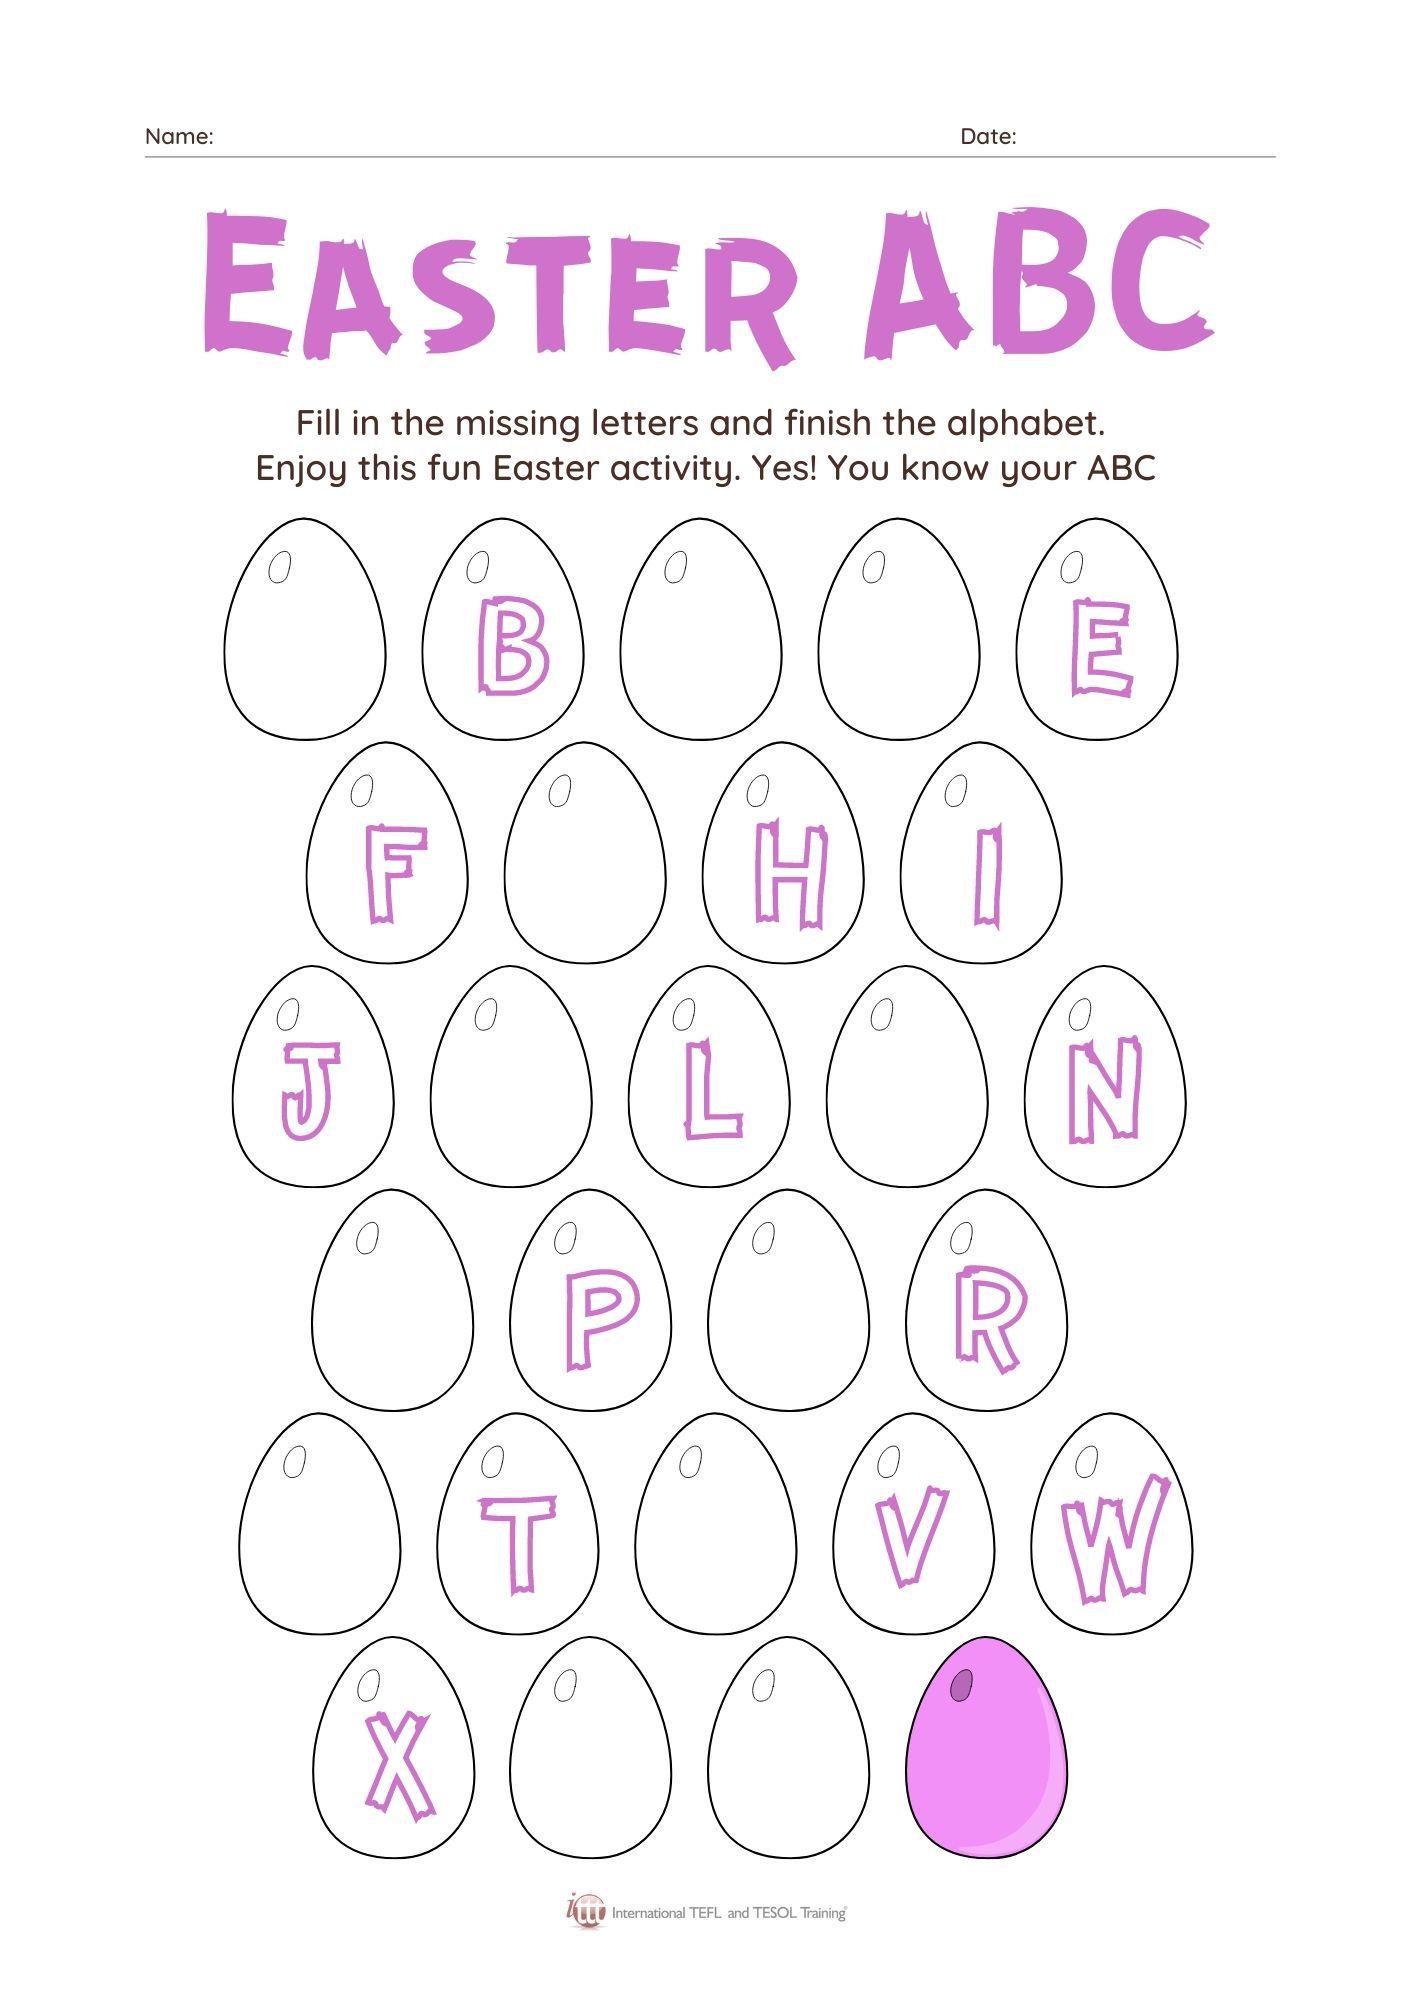 Grammar corner Easter ABC Worksheet